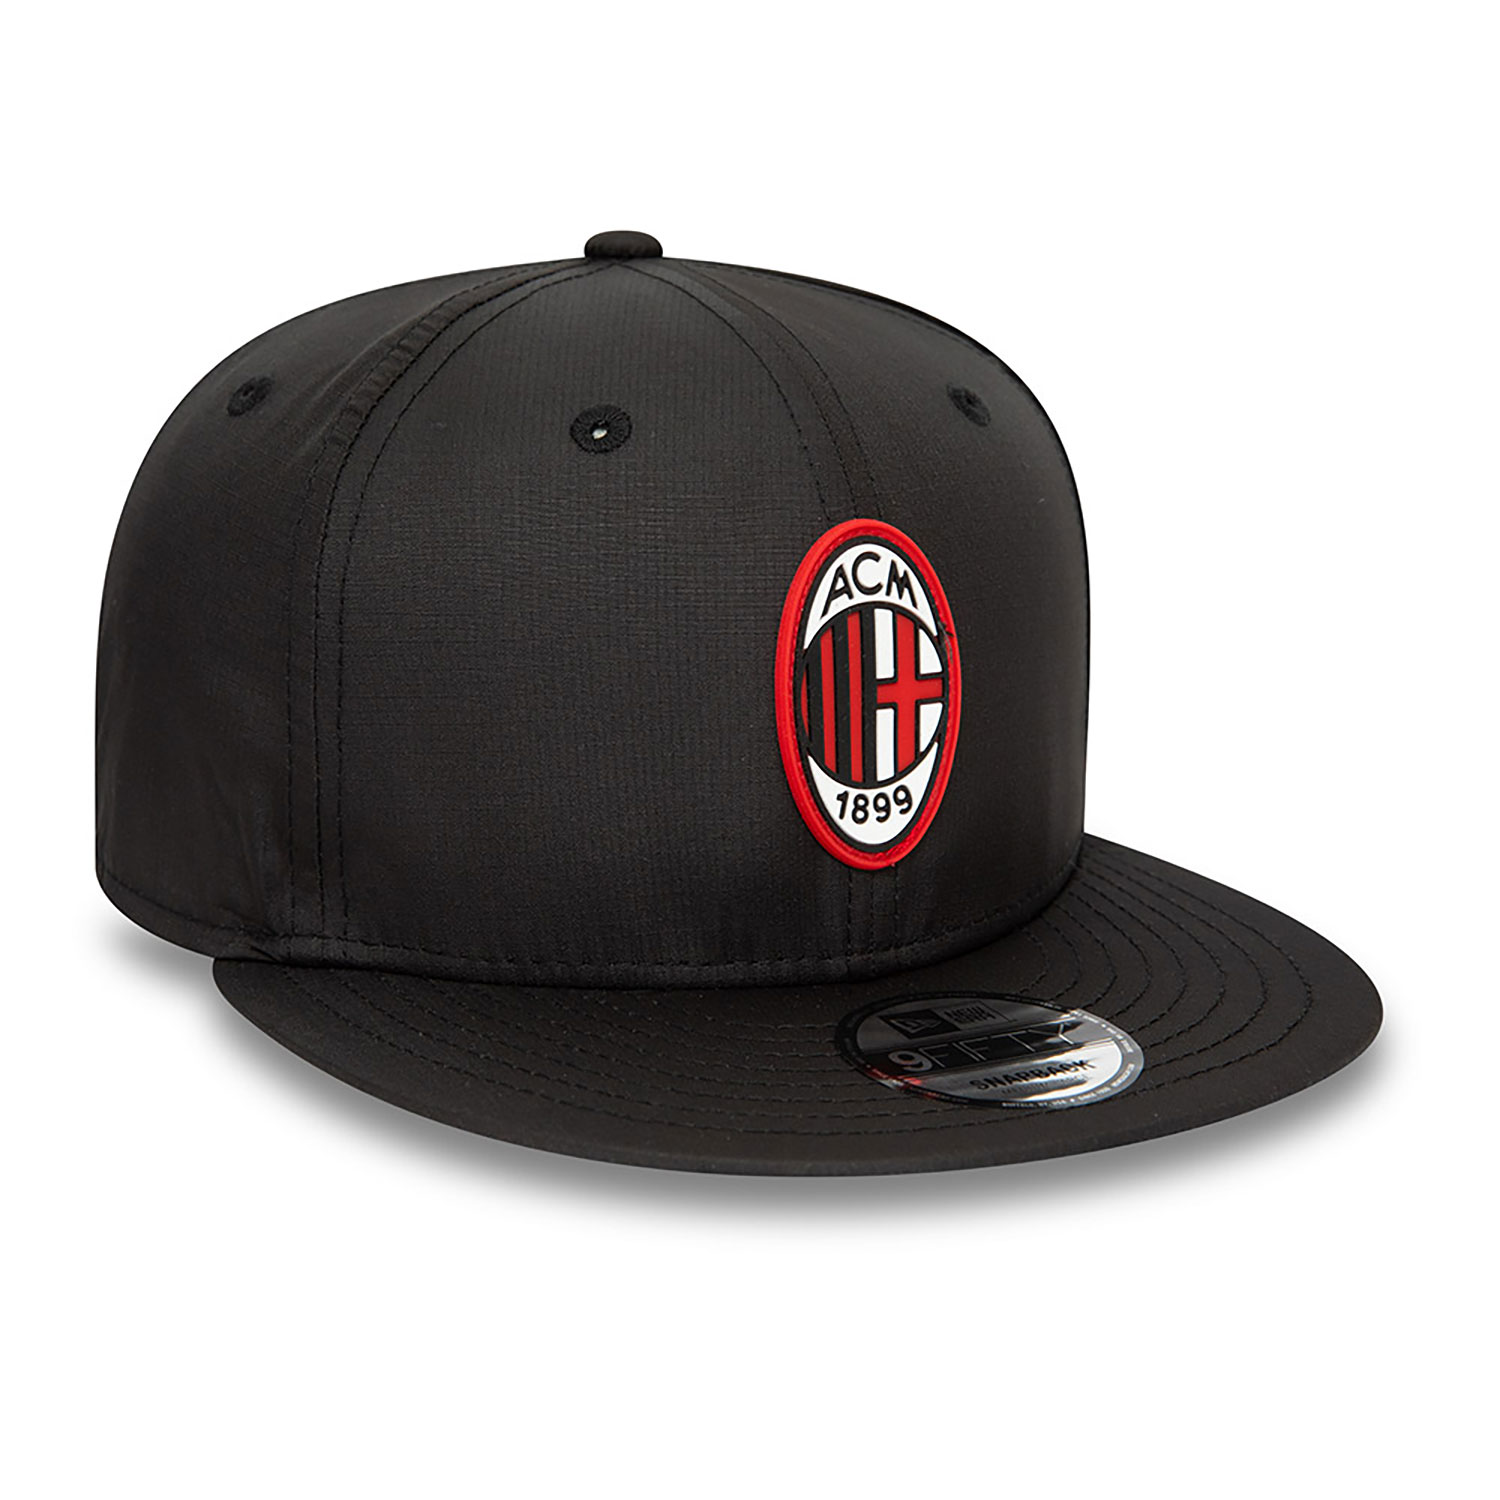 AC Milan Ripstop Black 9FIFTY Snapback Cap